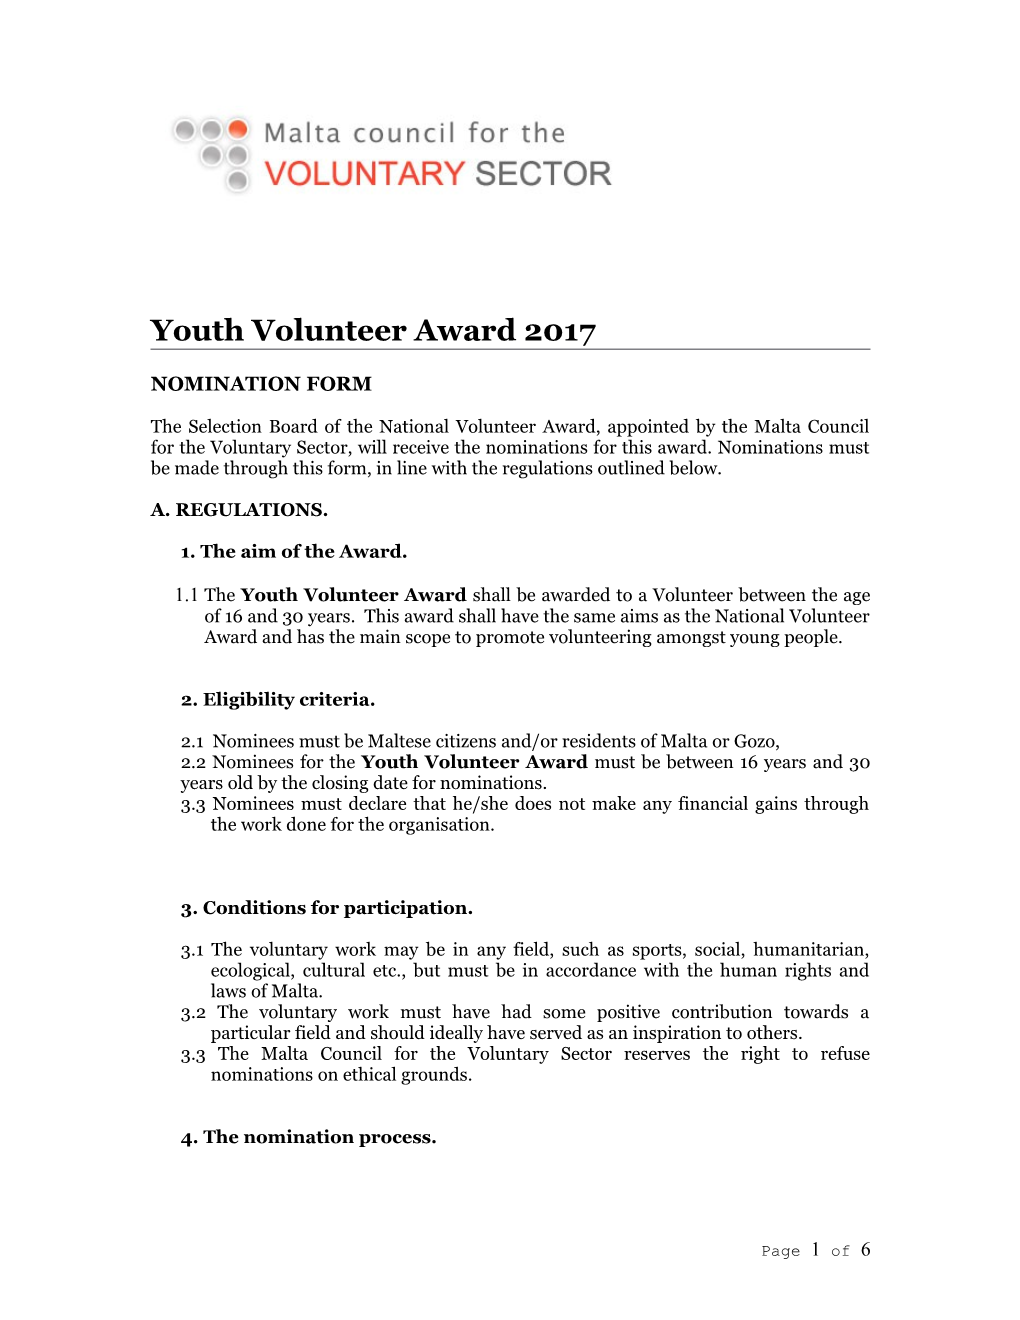 Youth Volunteer Award 2017